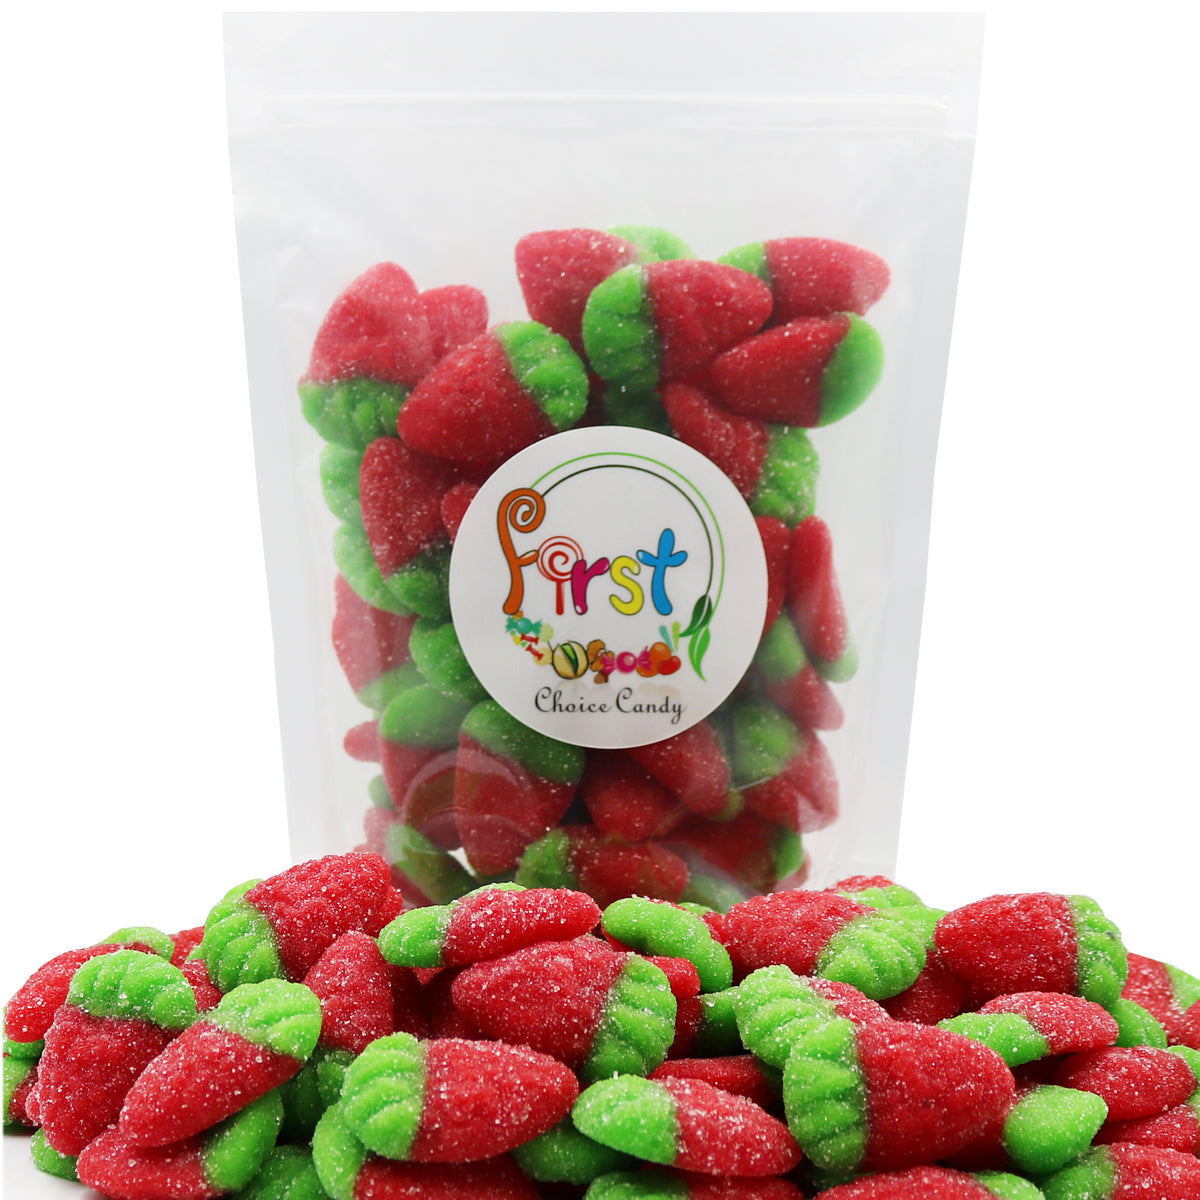 FirstChoiceCandy 3D Gummy Fruit Juicy Candy (Assorted Fruit, 5 pound)